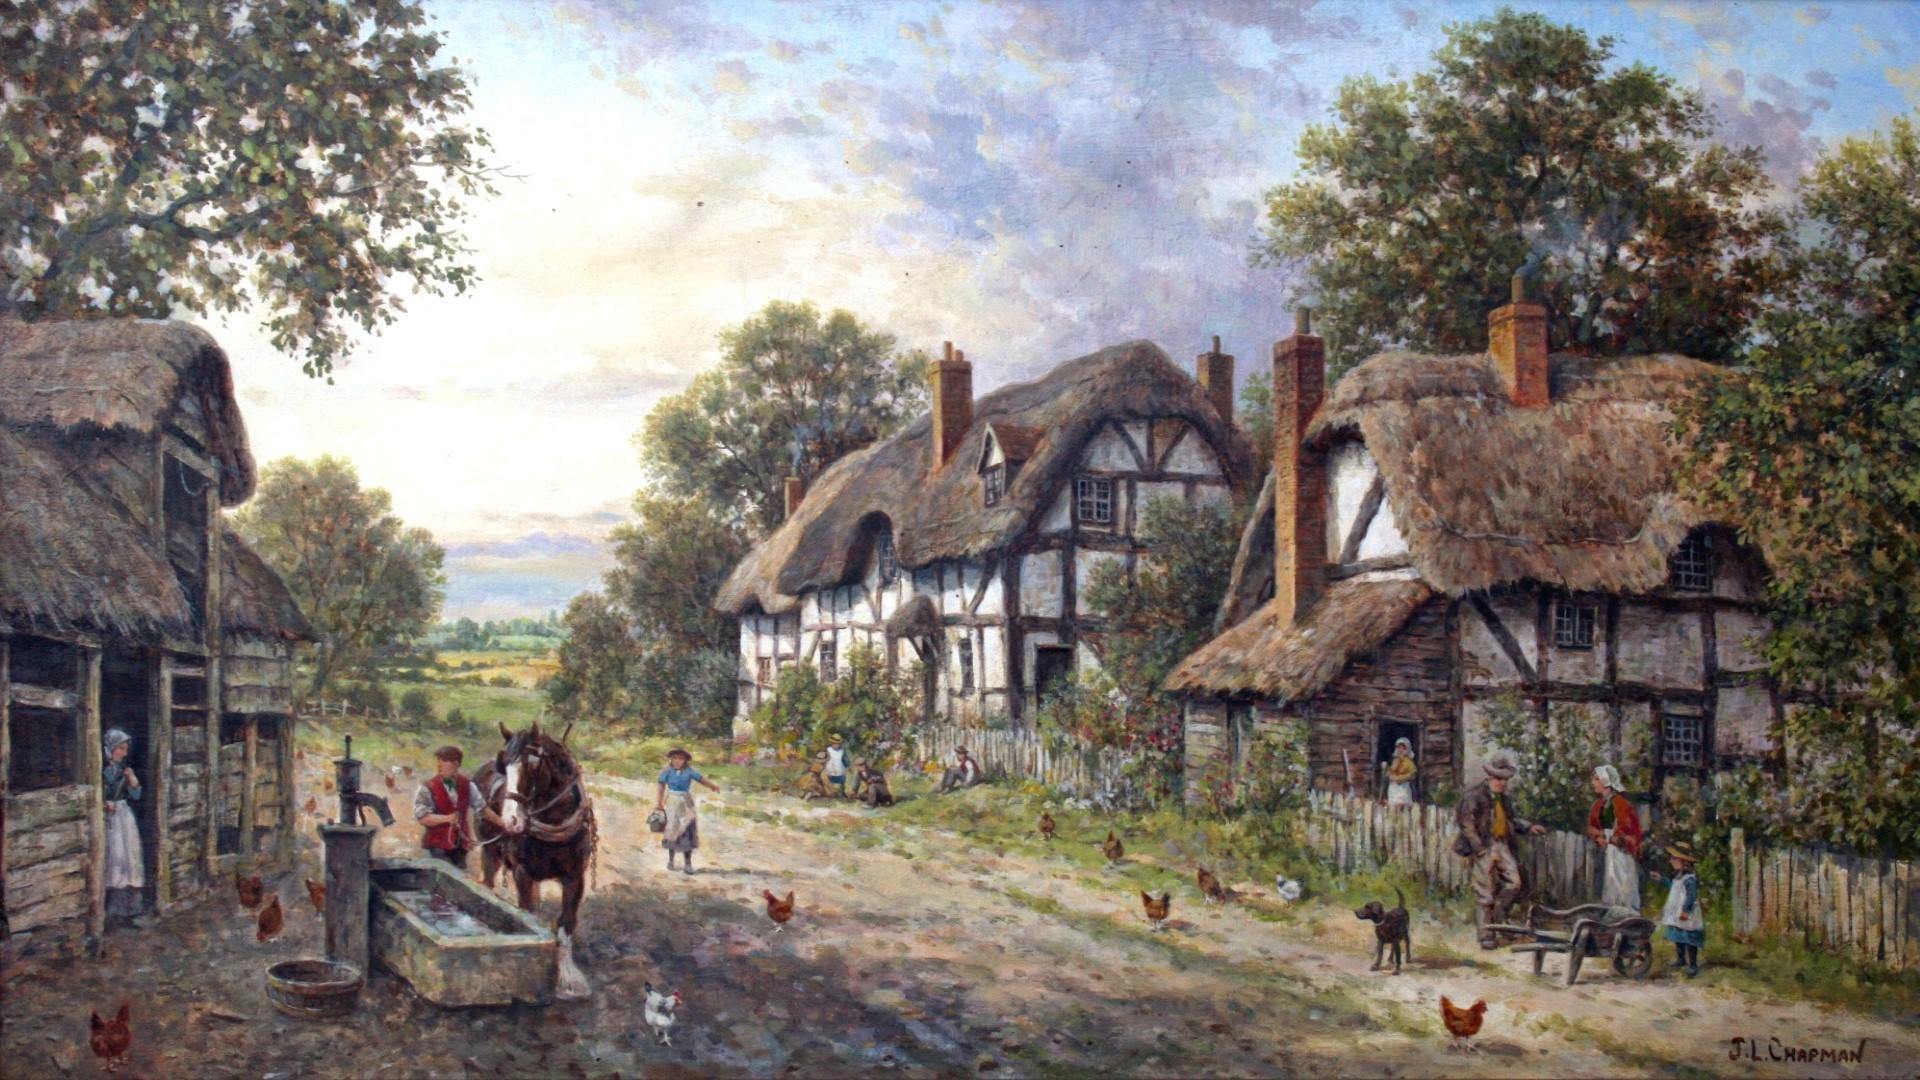 p. Village Wallpaper, Village Widescreen Background